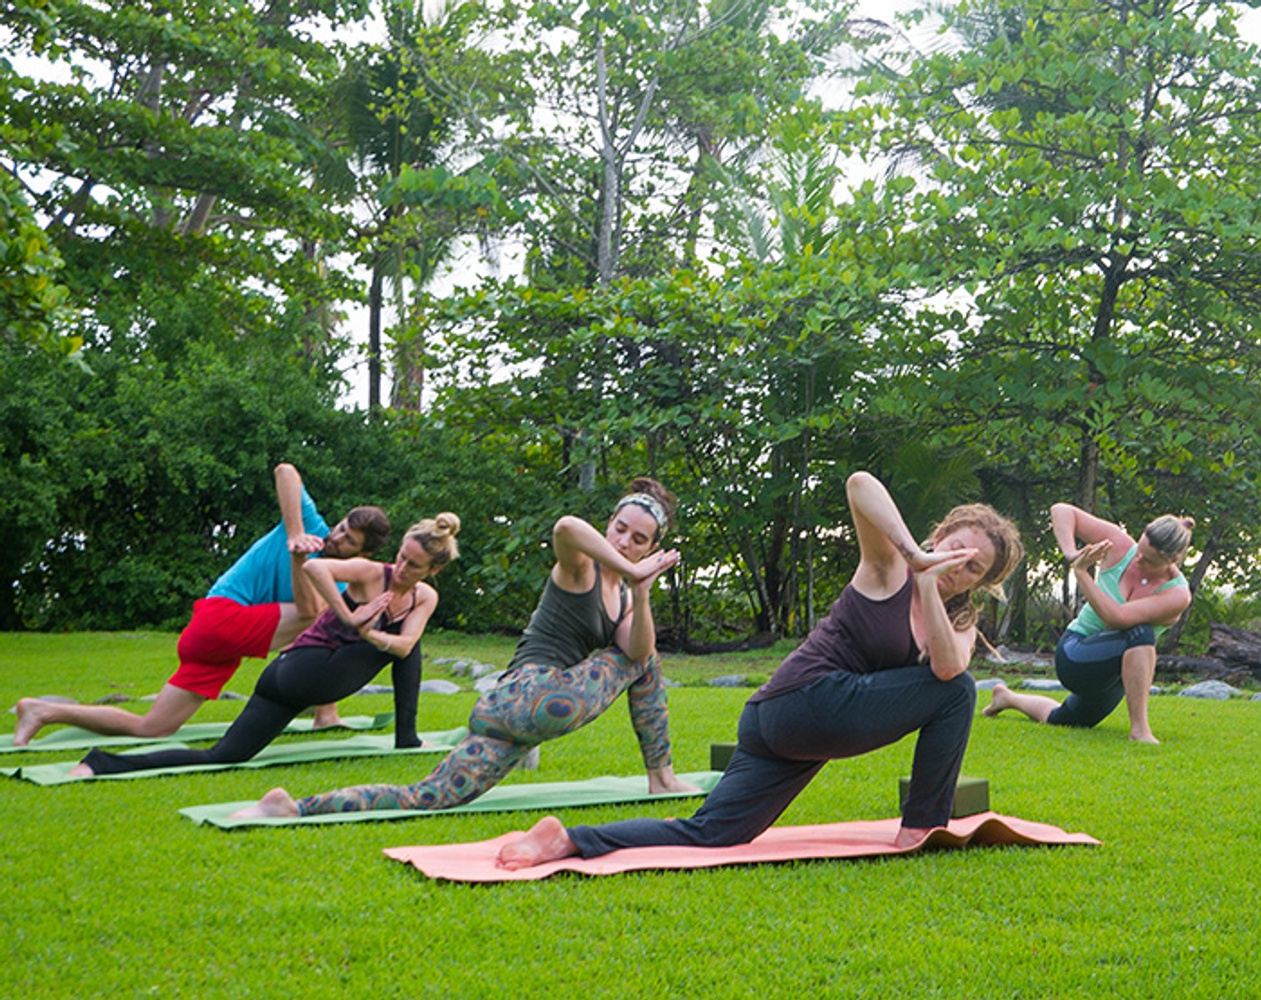 25 Days Beach 200hr Yoga Training with Yoga Alliance Accreditation